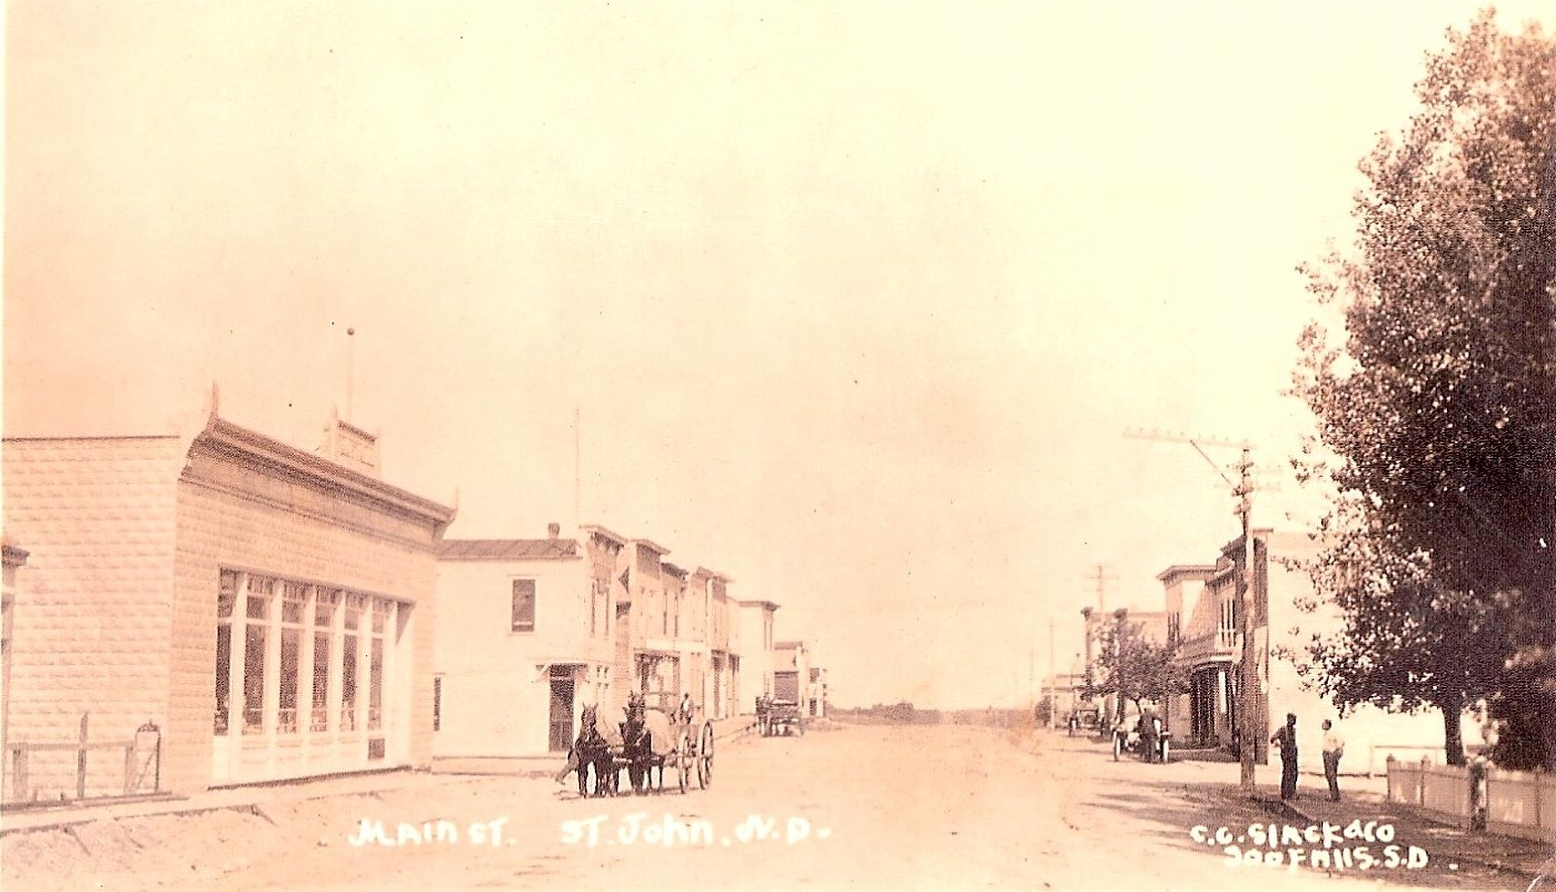 Historical PHOTO: St John ND Main Street 